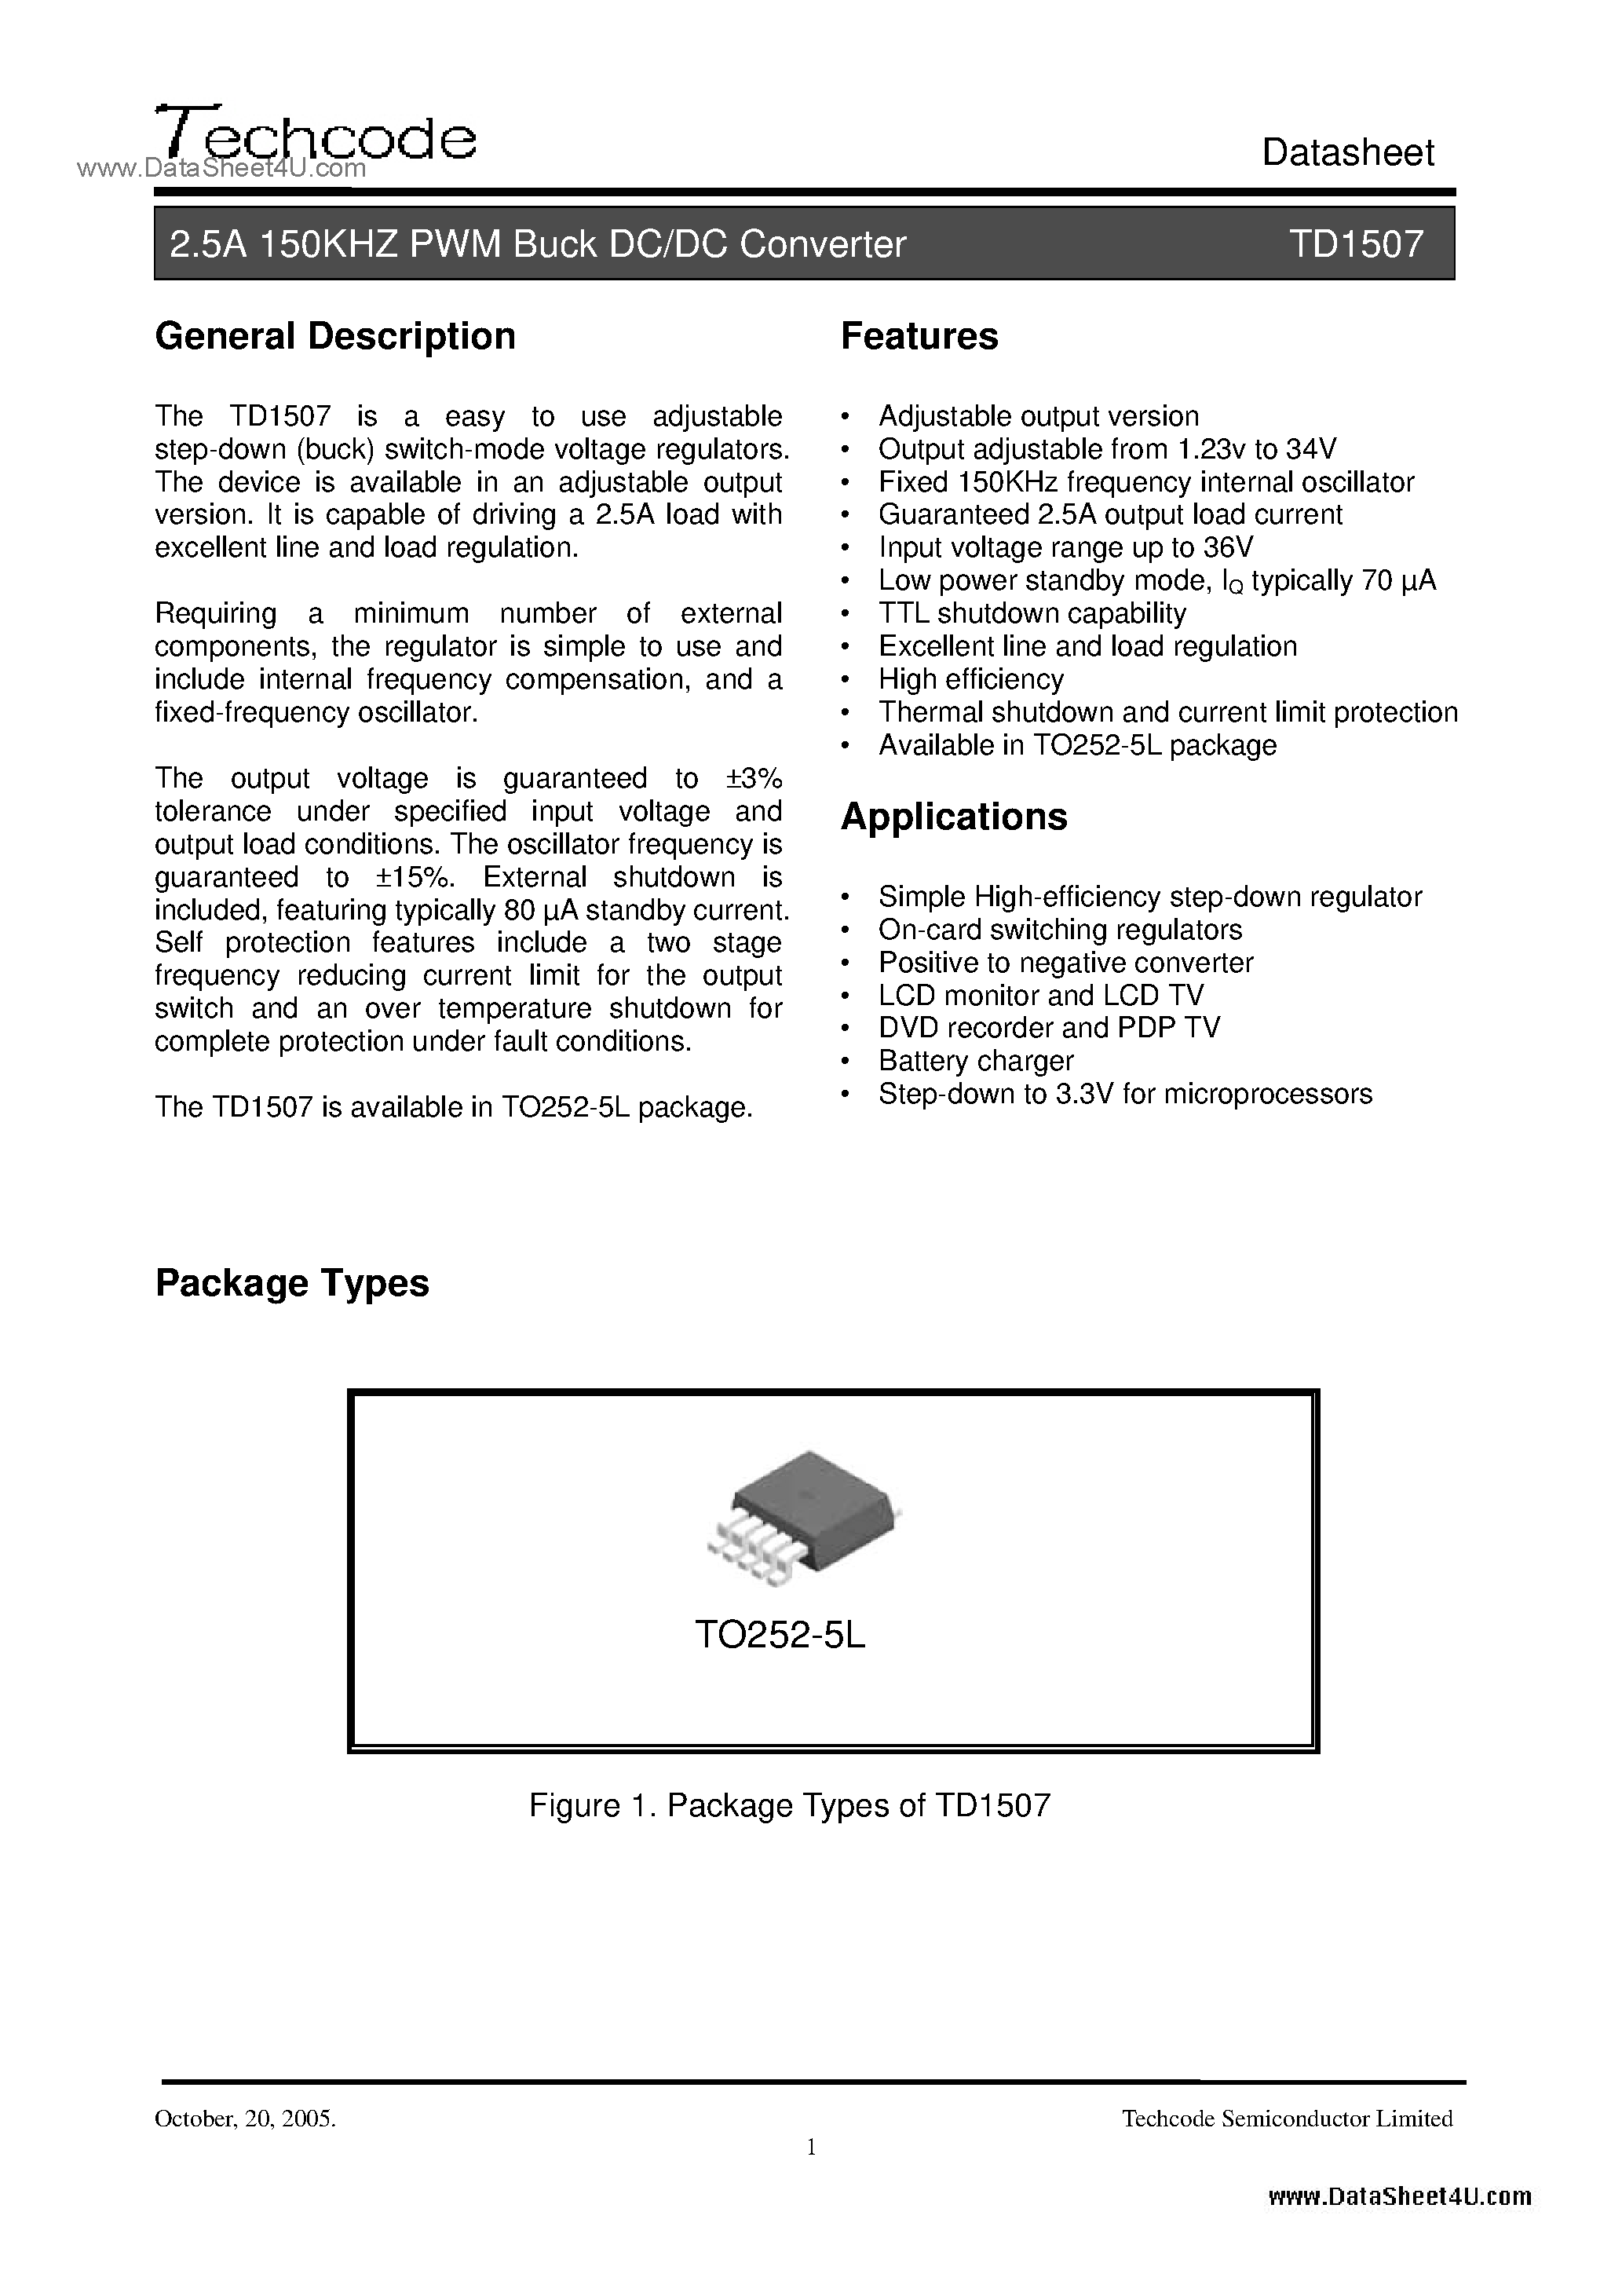 Datasheet TD1507 - 2.5A 150KHZ PWM Buck DC/DC Converter page 1